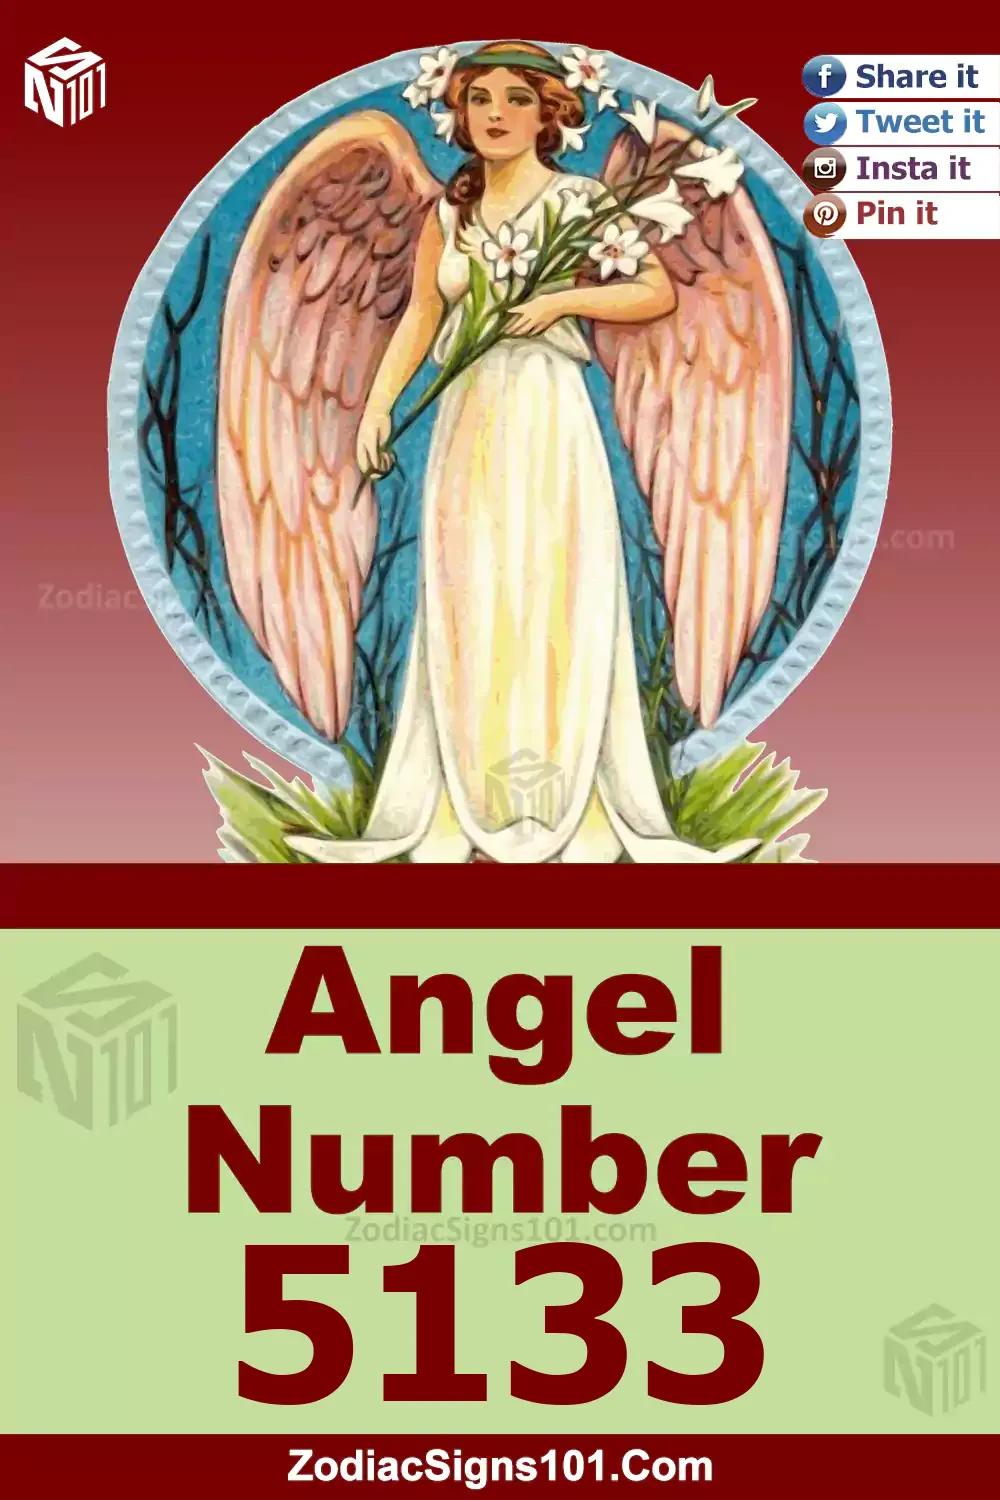 5133-Angel-Number-Meaning.jpg